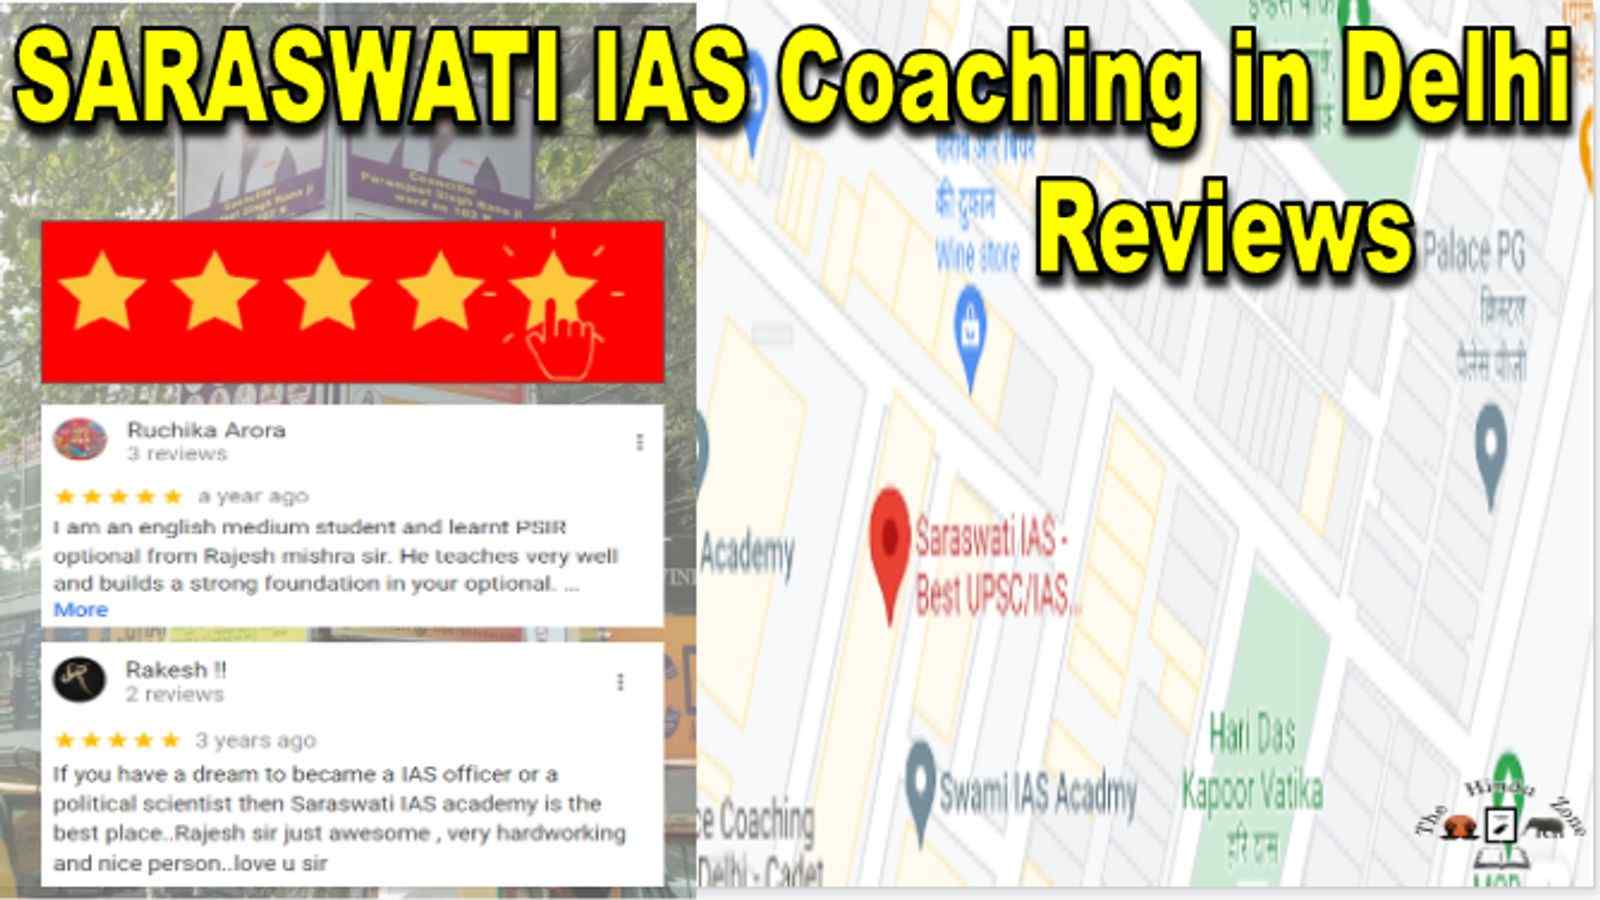 Saraswati IAS Coaching in Delhi Reviews